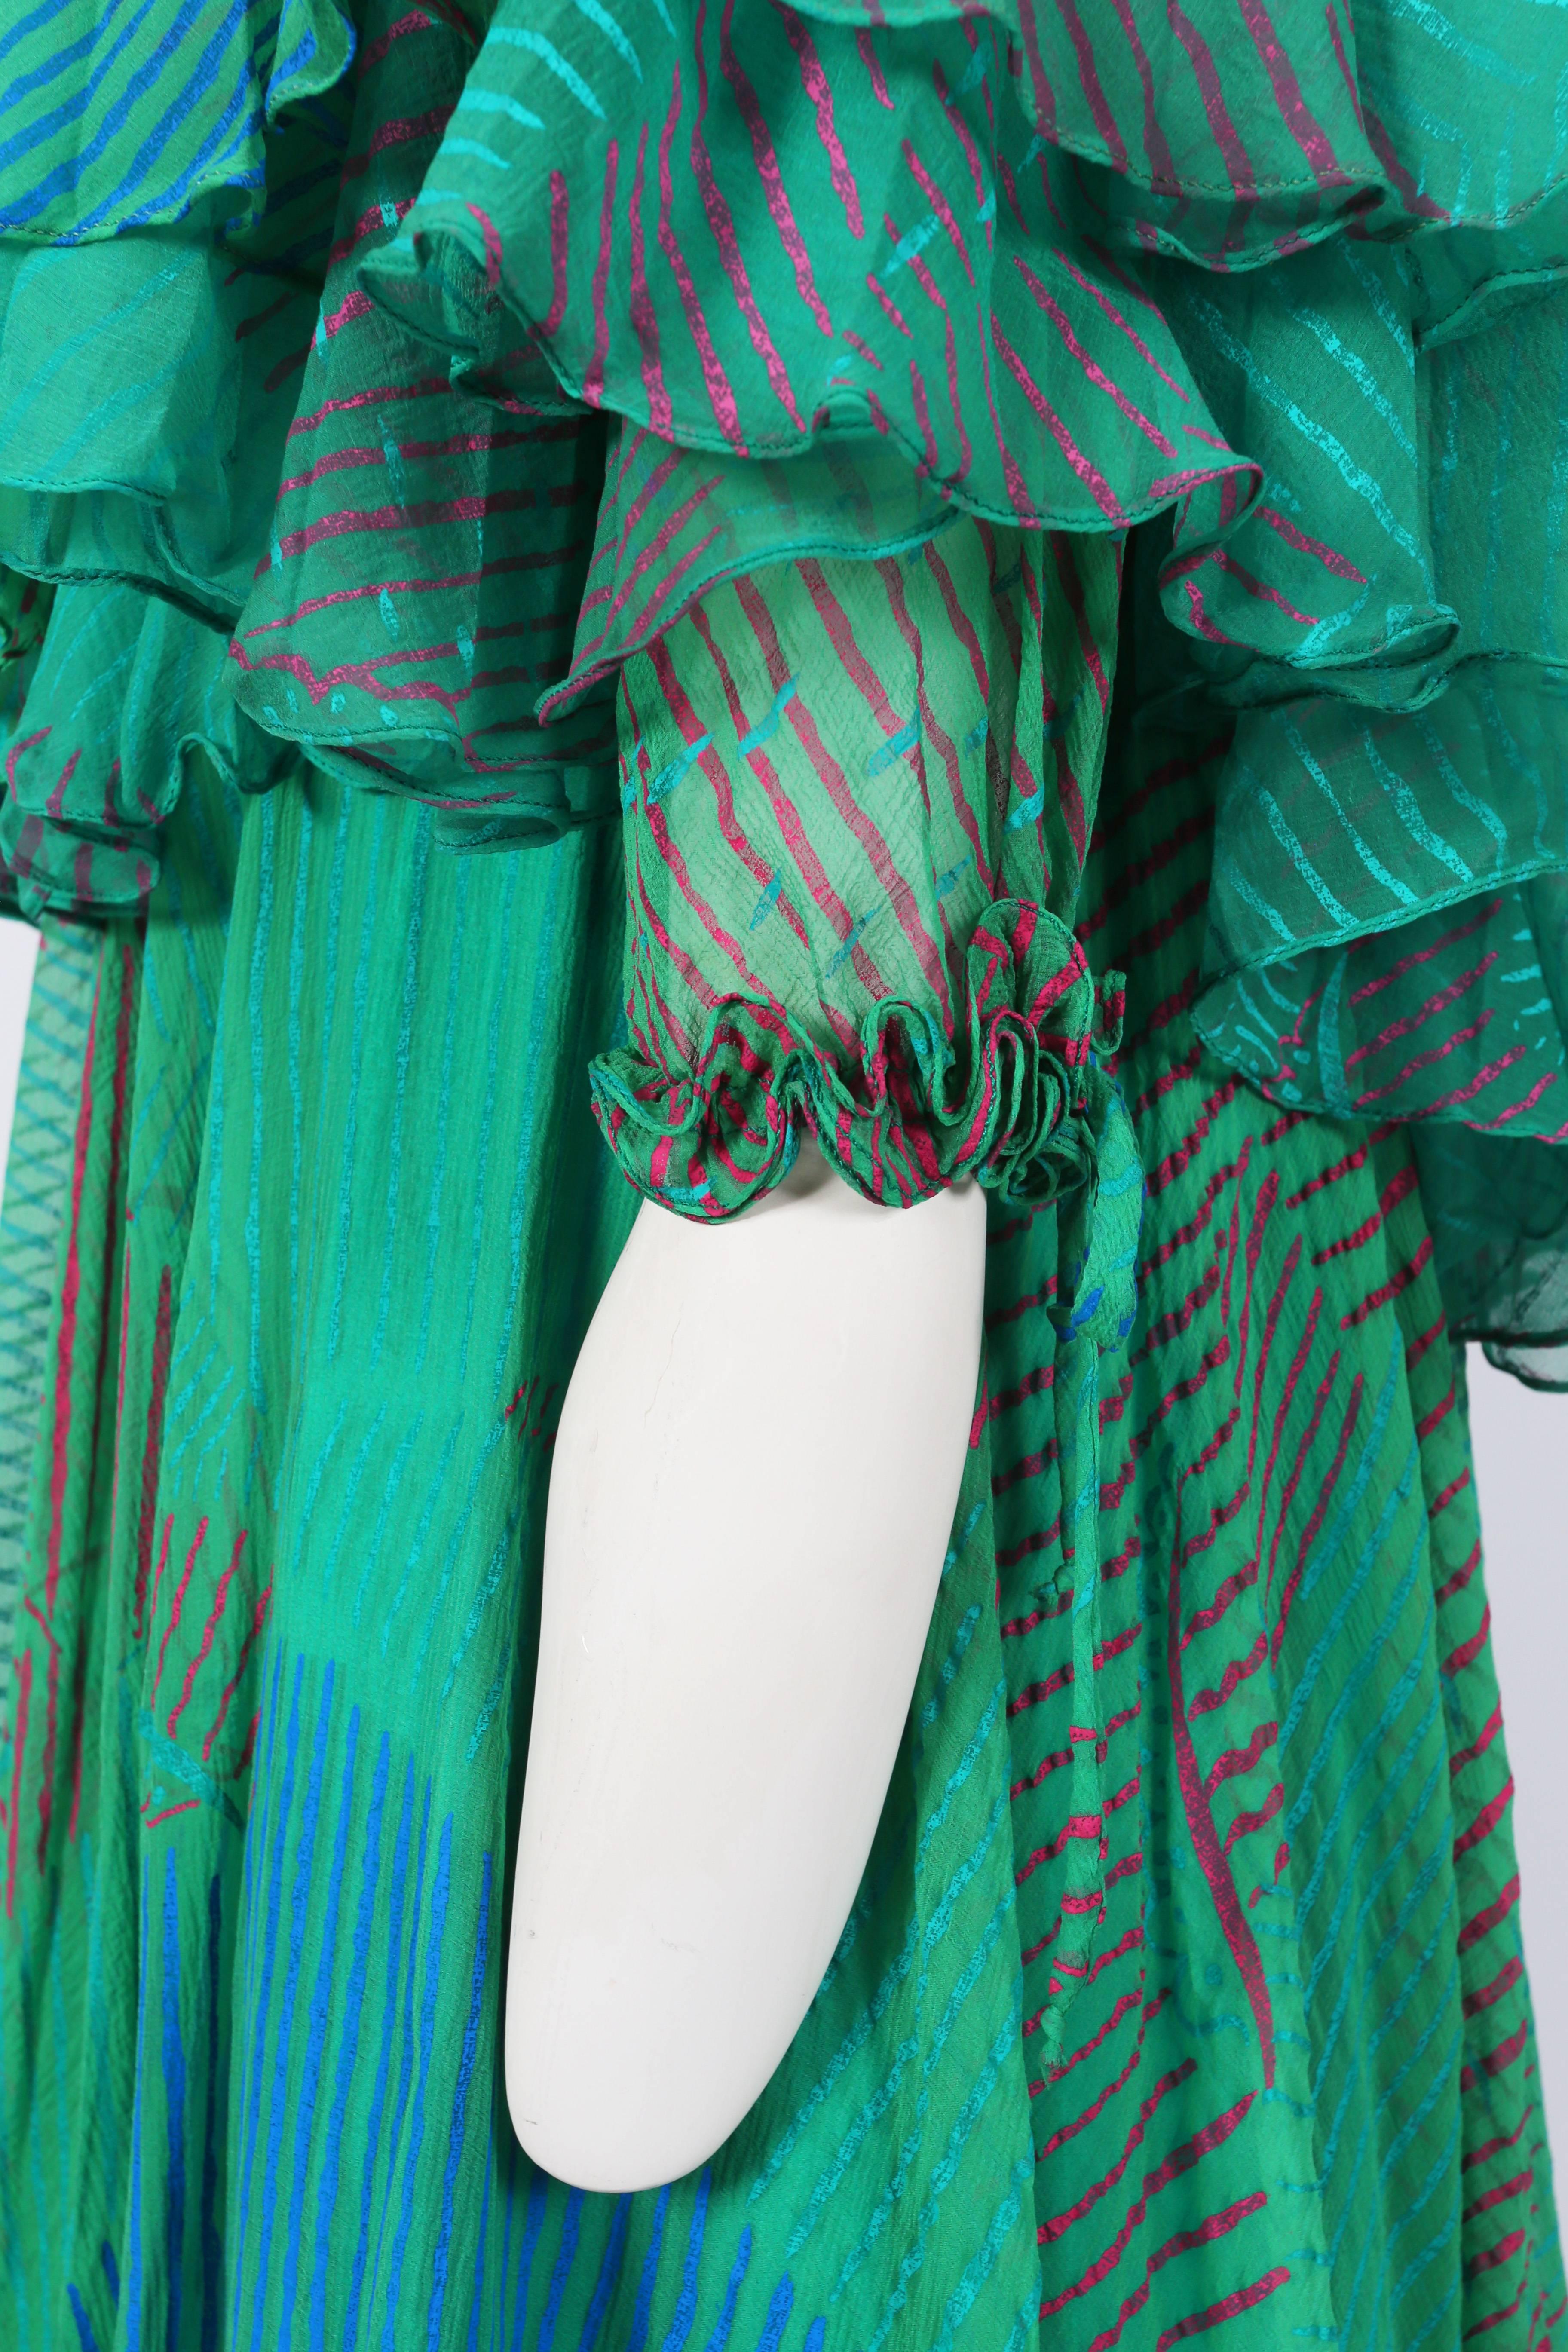 Ossie Clark Celia Birtwell couture silk chiffon screen-print dress, circa 1976 3